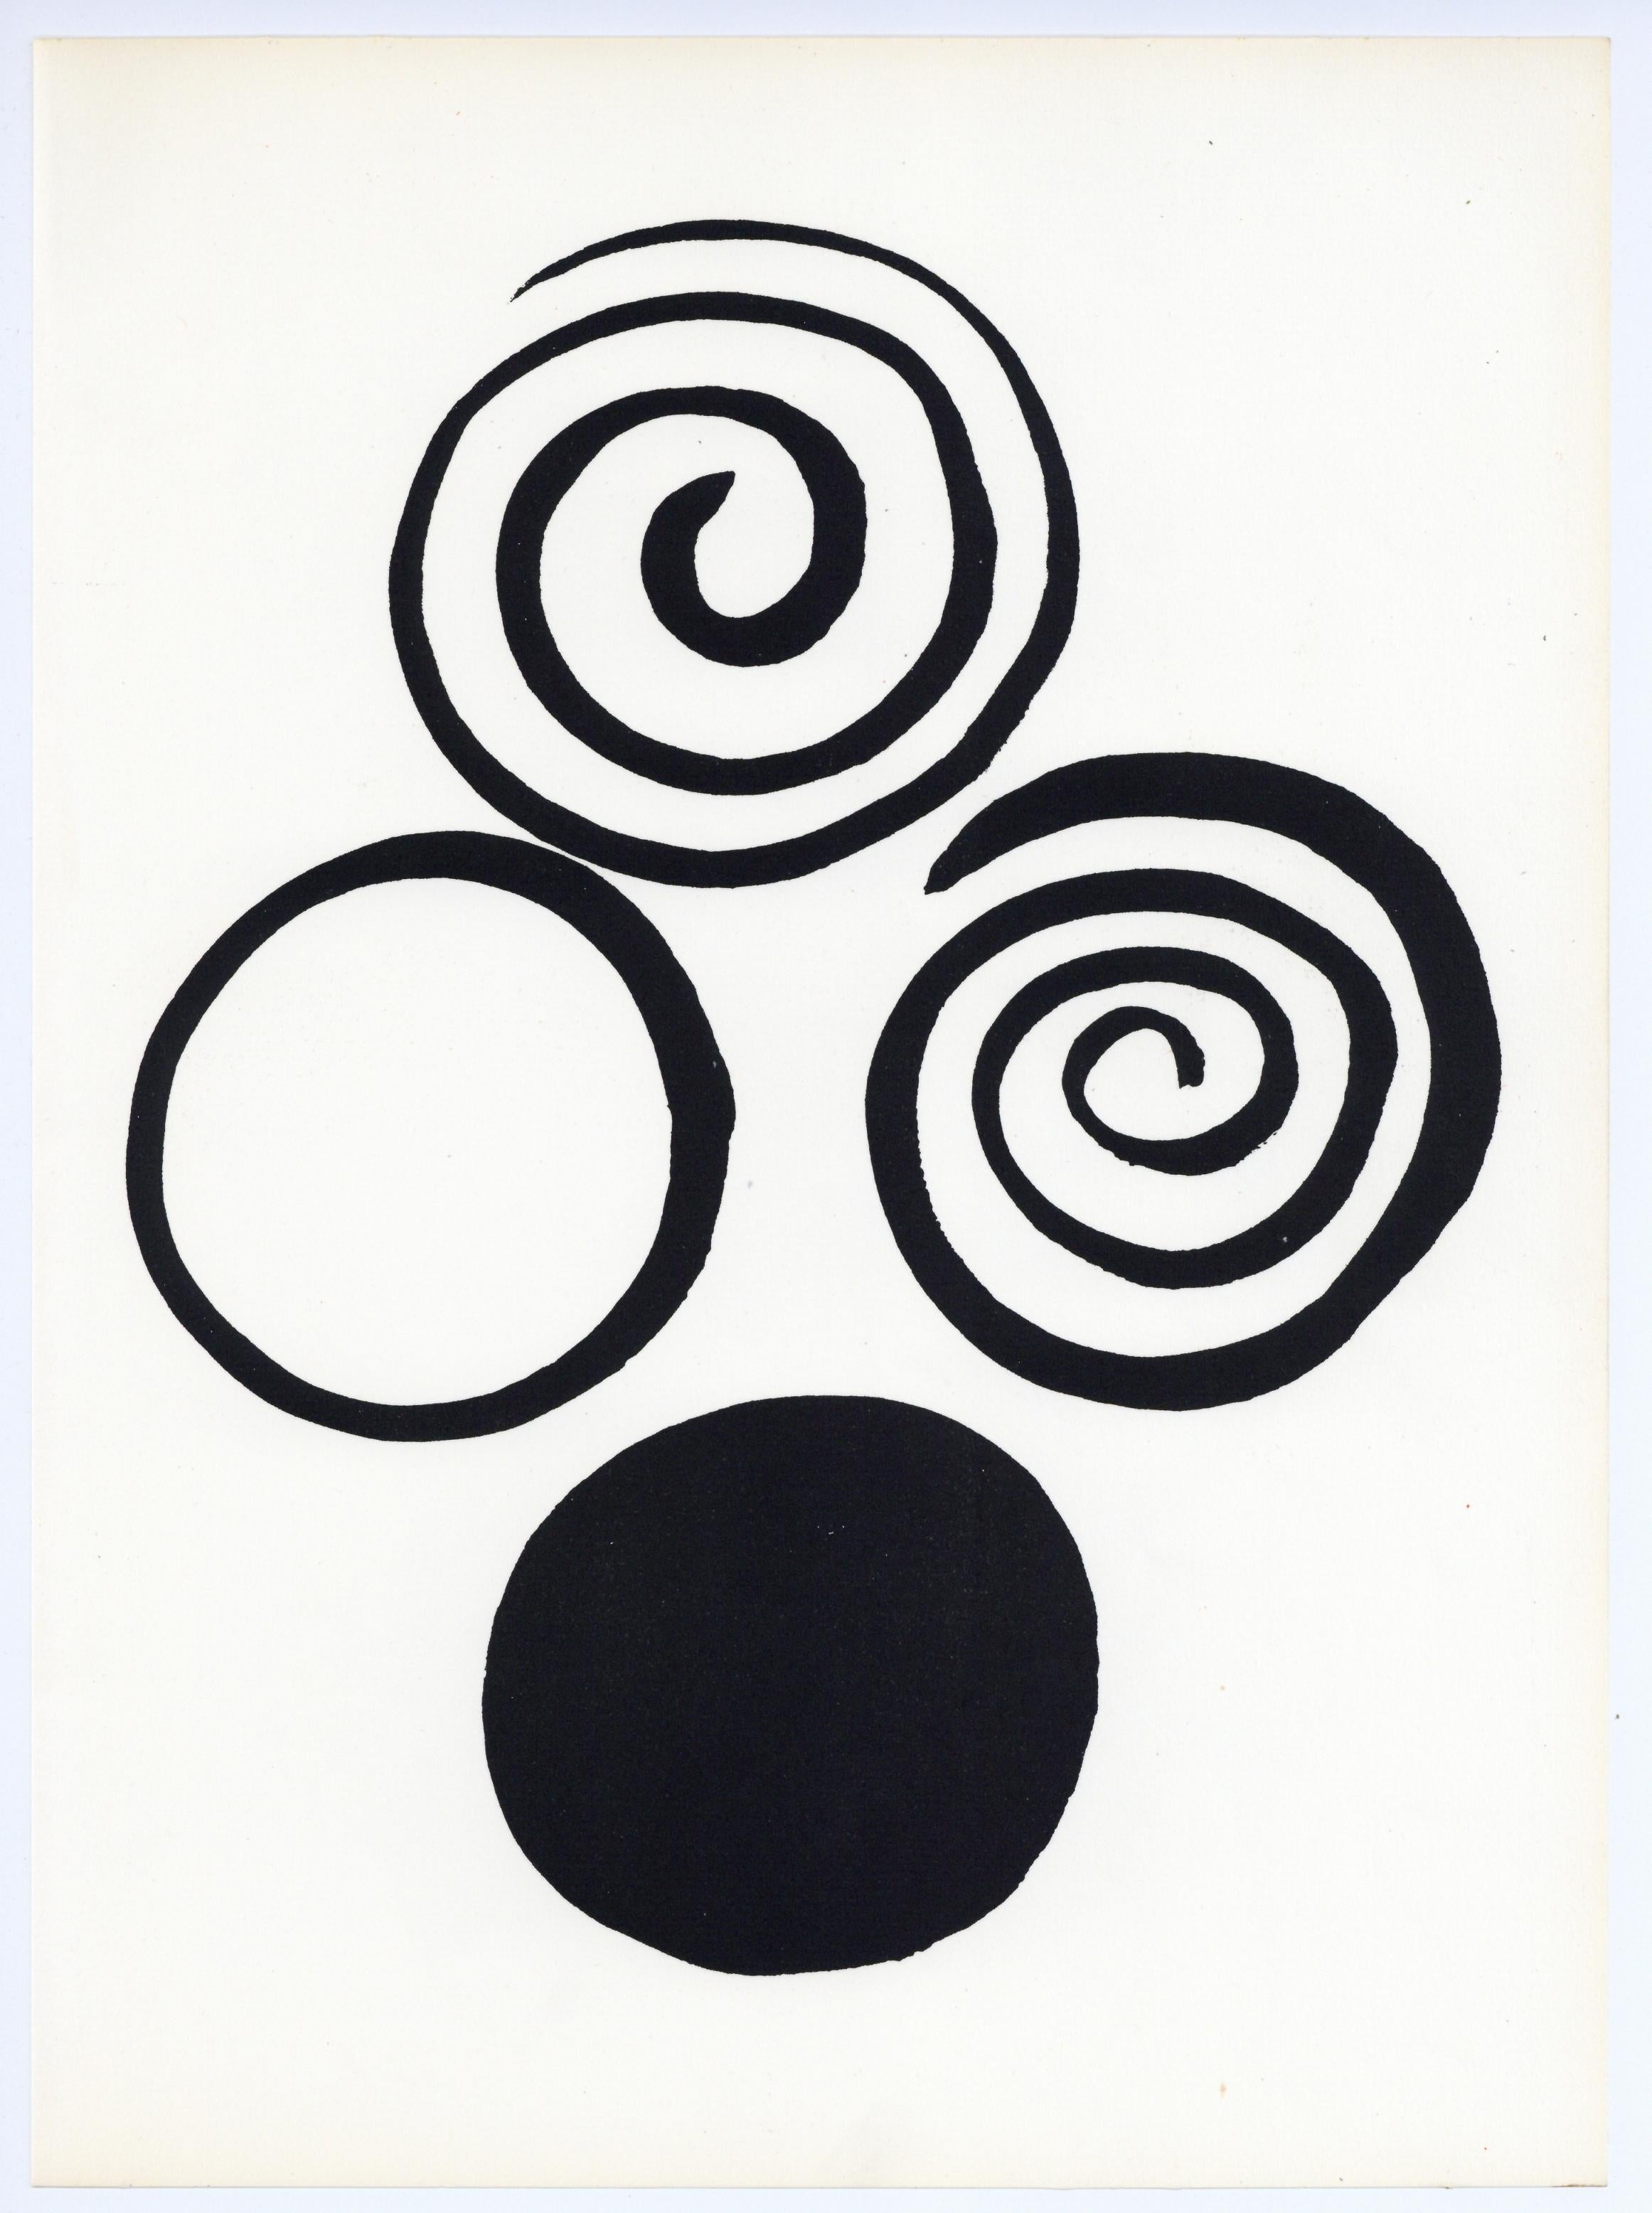 Calder, Composition, Musée National d'Art Moderne, Paris, 1965 (after)